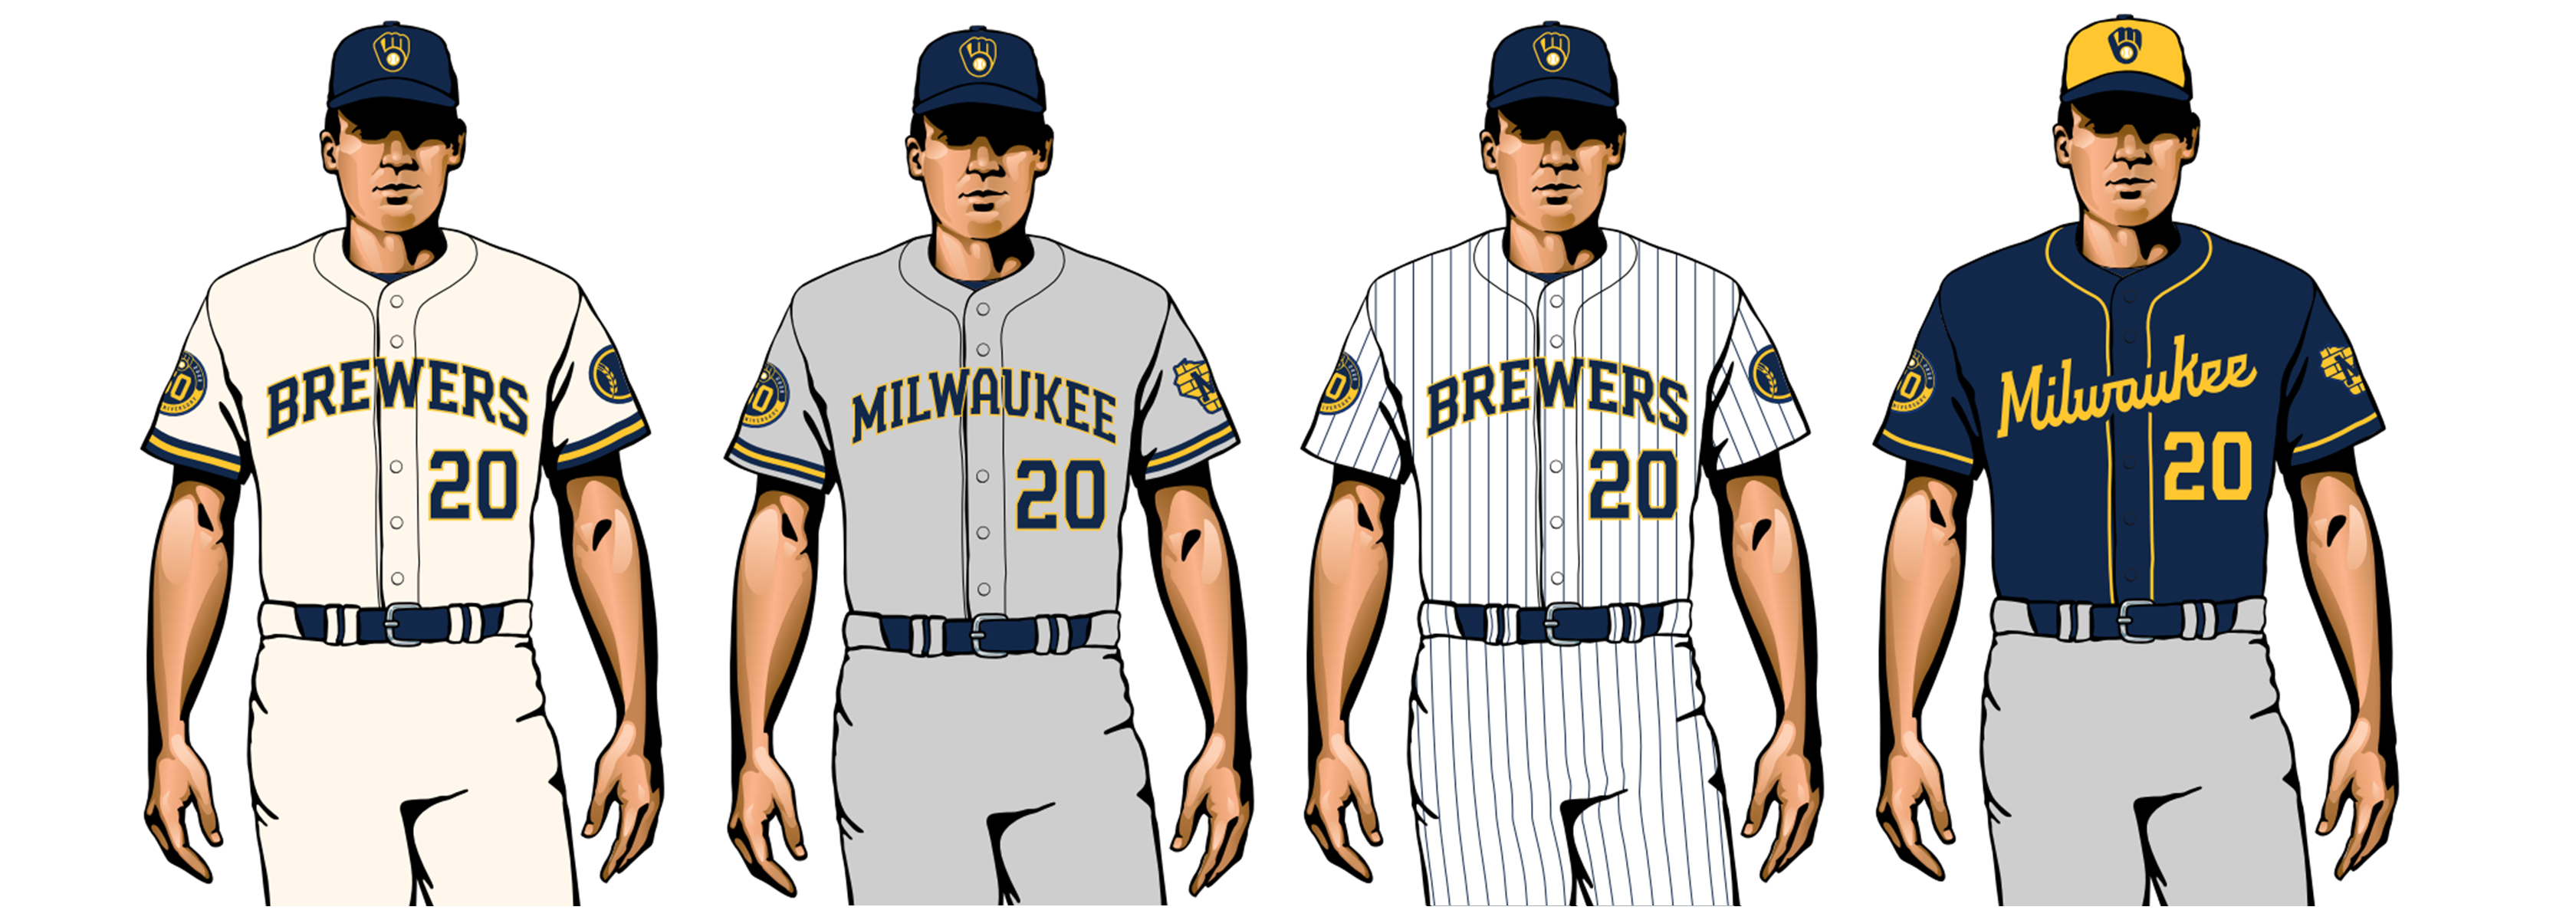 2020 milwaukee brewers uniforms